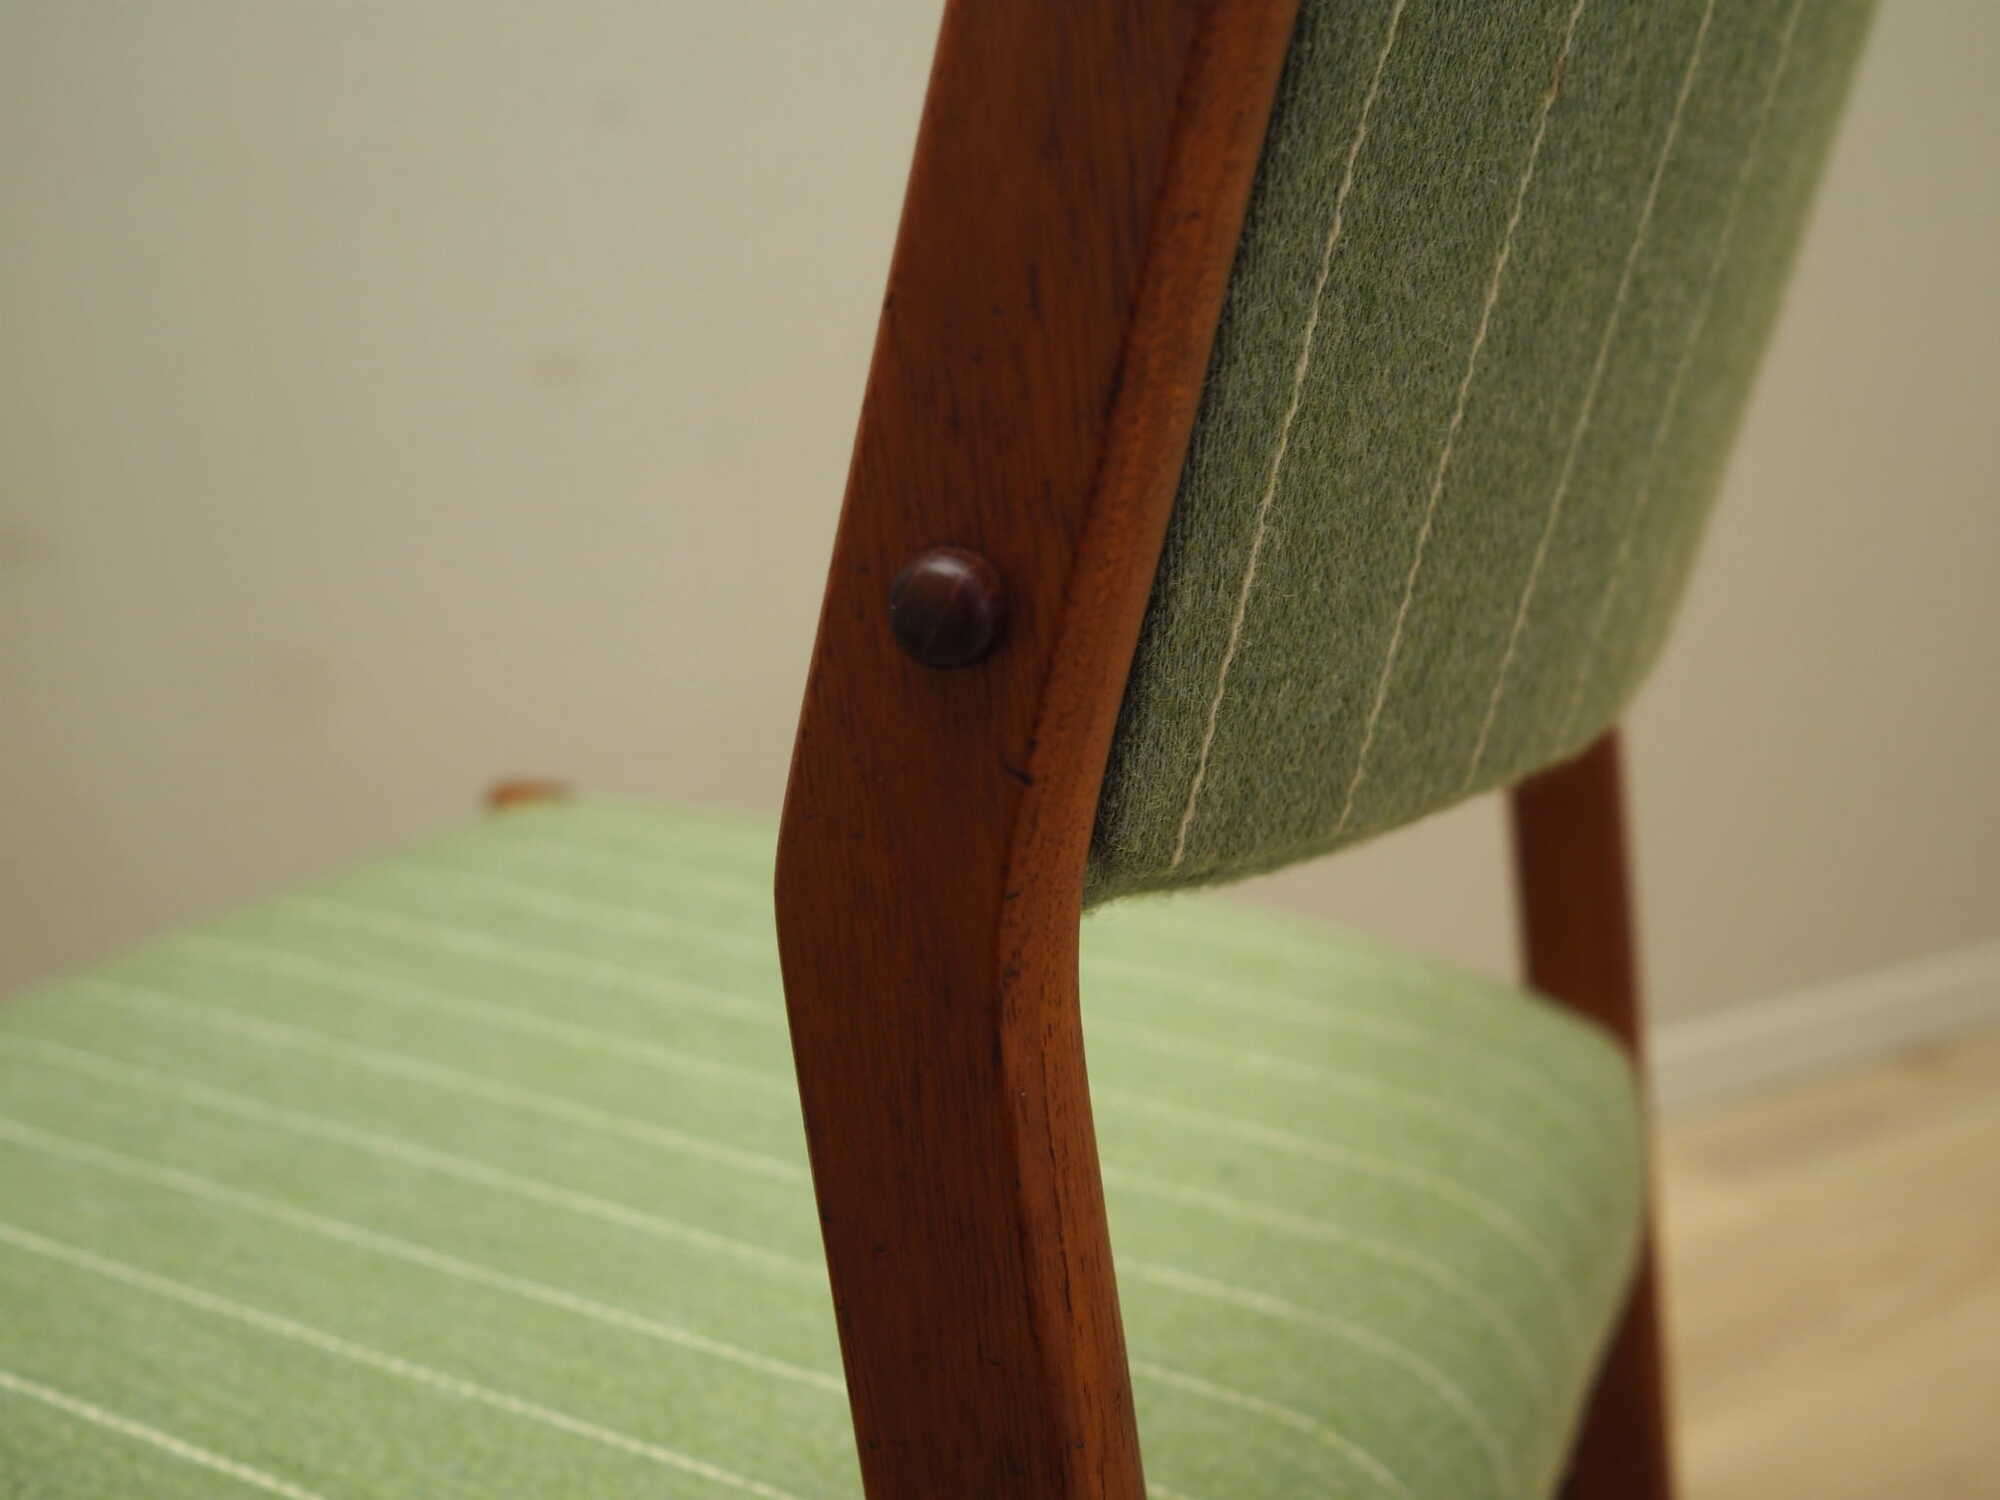 2x Vintage Stuhl Teakholz Textil Grün 1970er Jahre 9